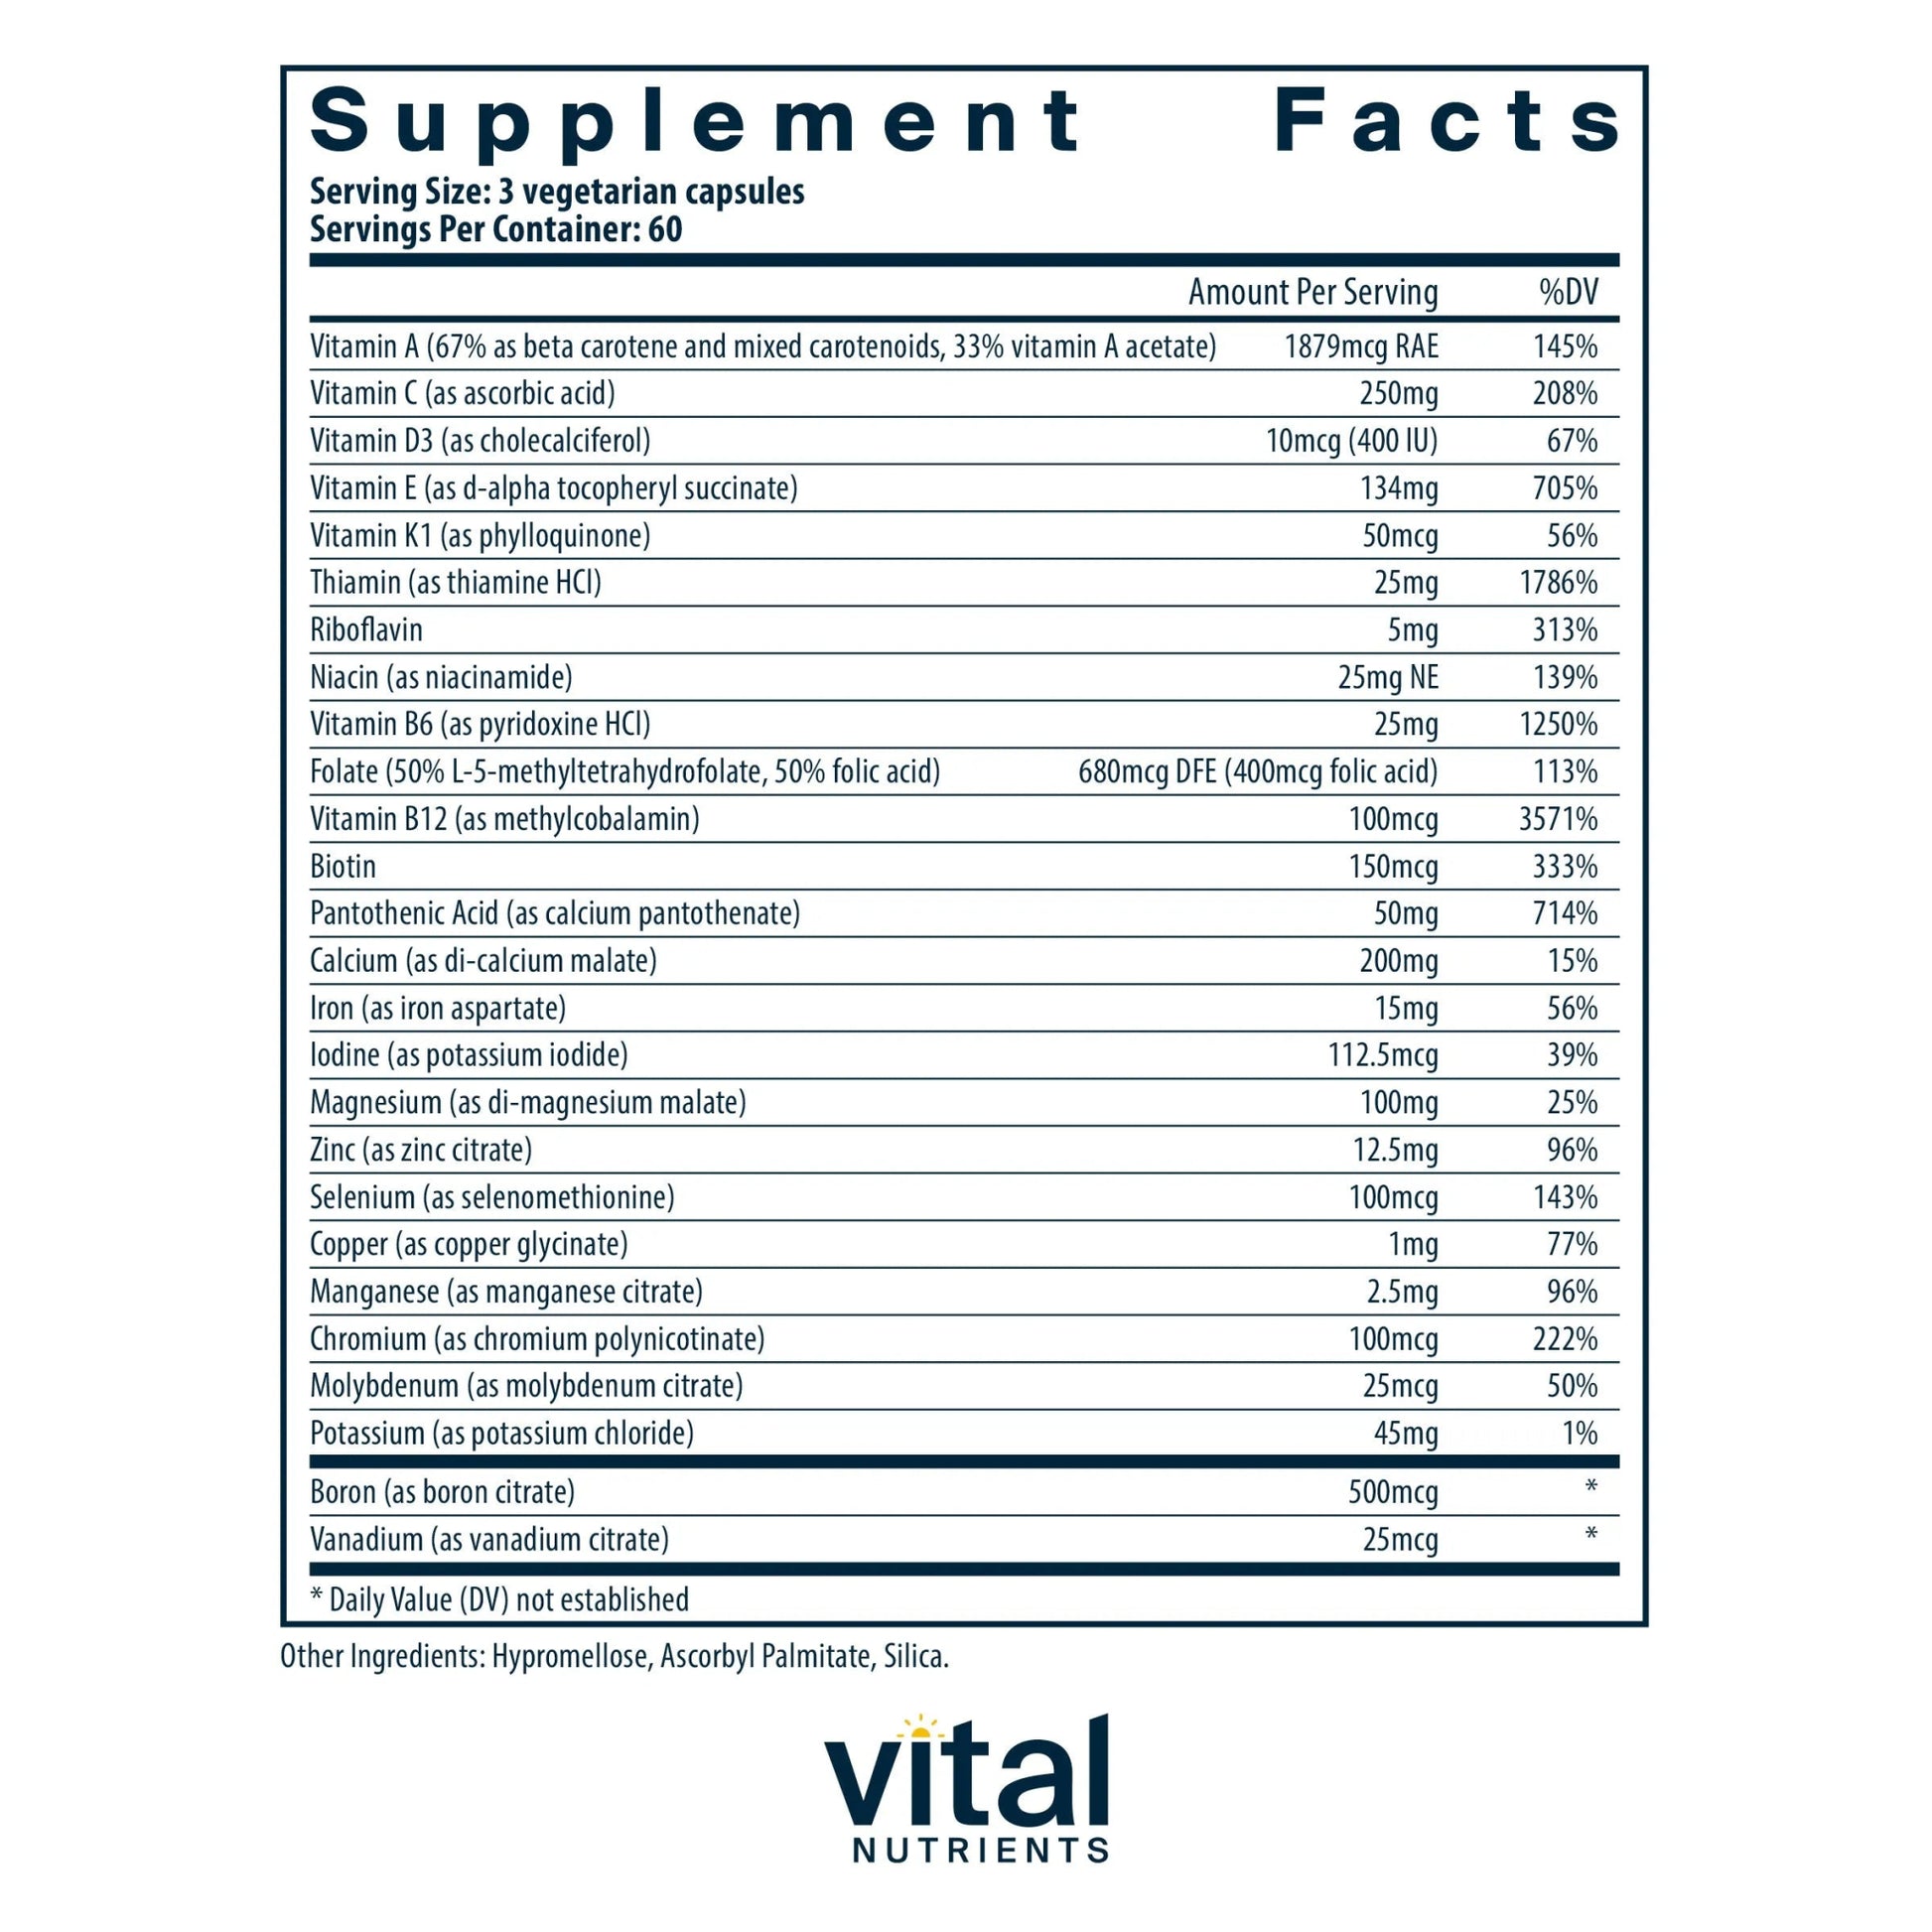 PreNatal Multi-Nutrients(Vital Nutrition) - HAPIVERI